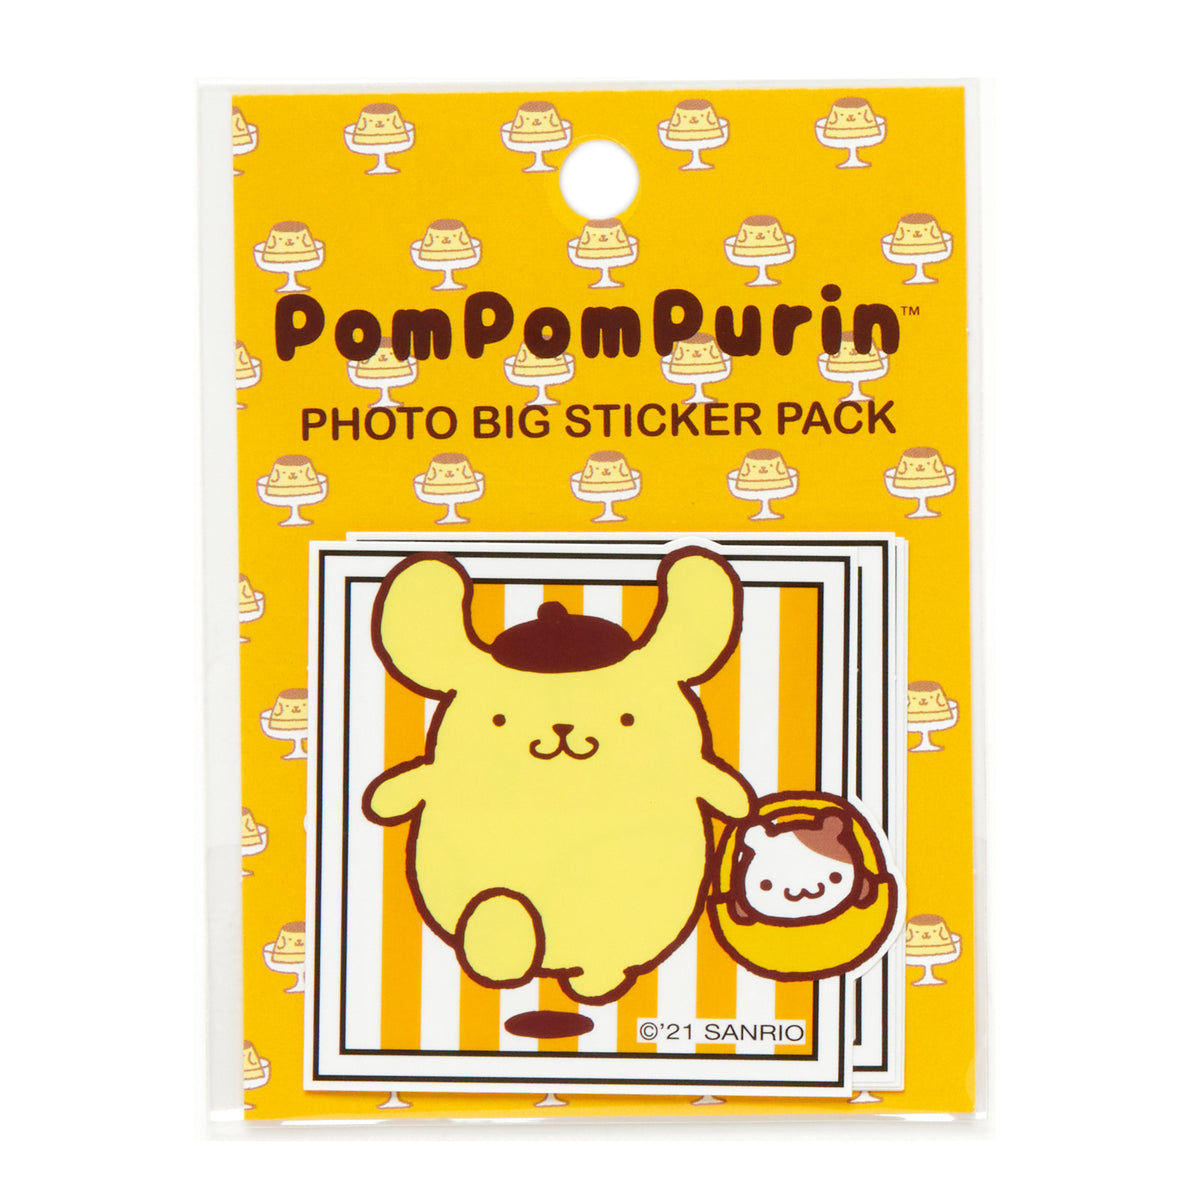 Pompompurin Photo Big Sticker Pack